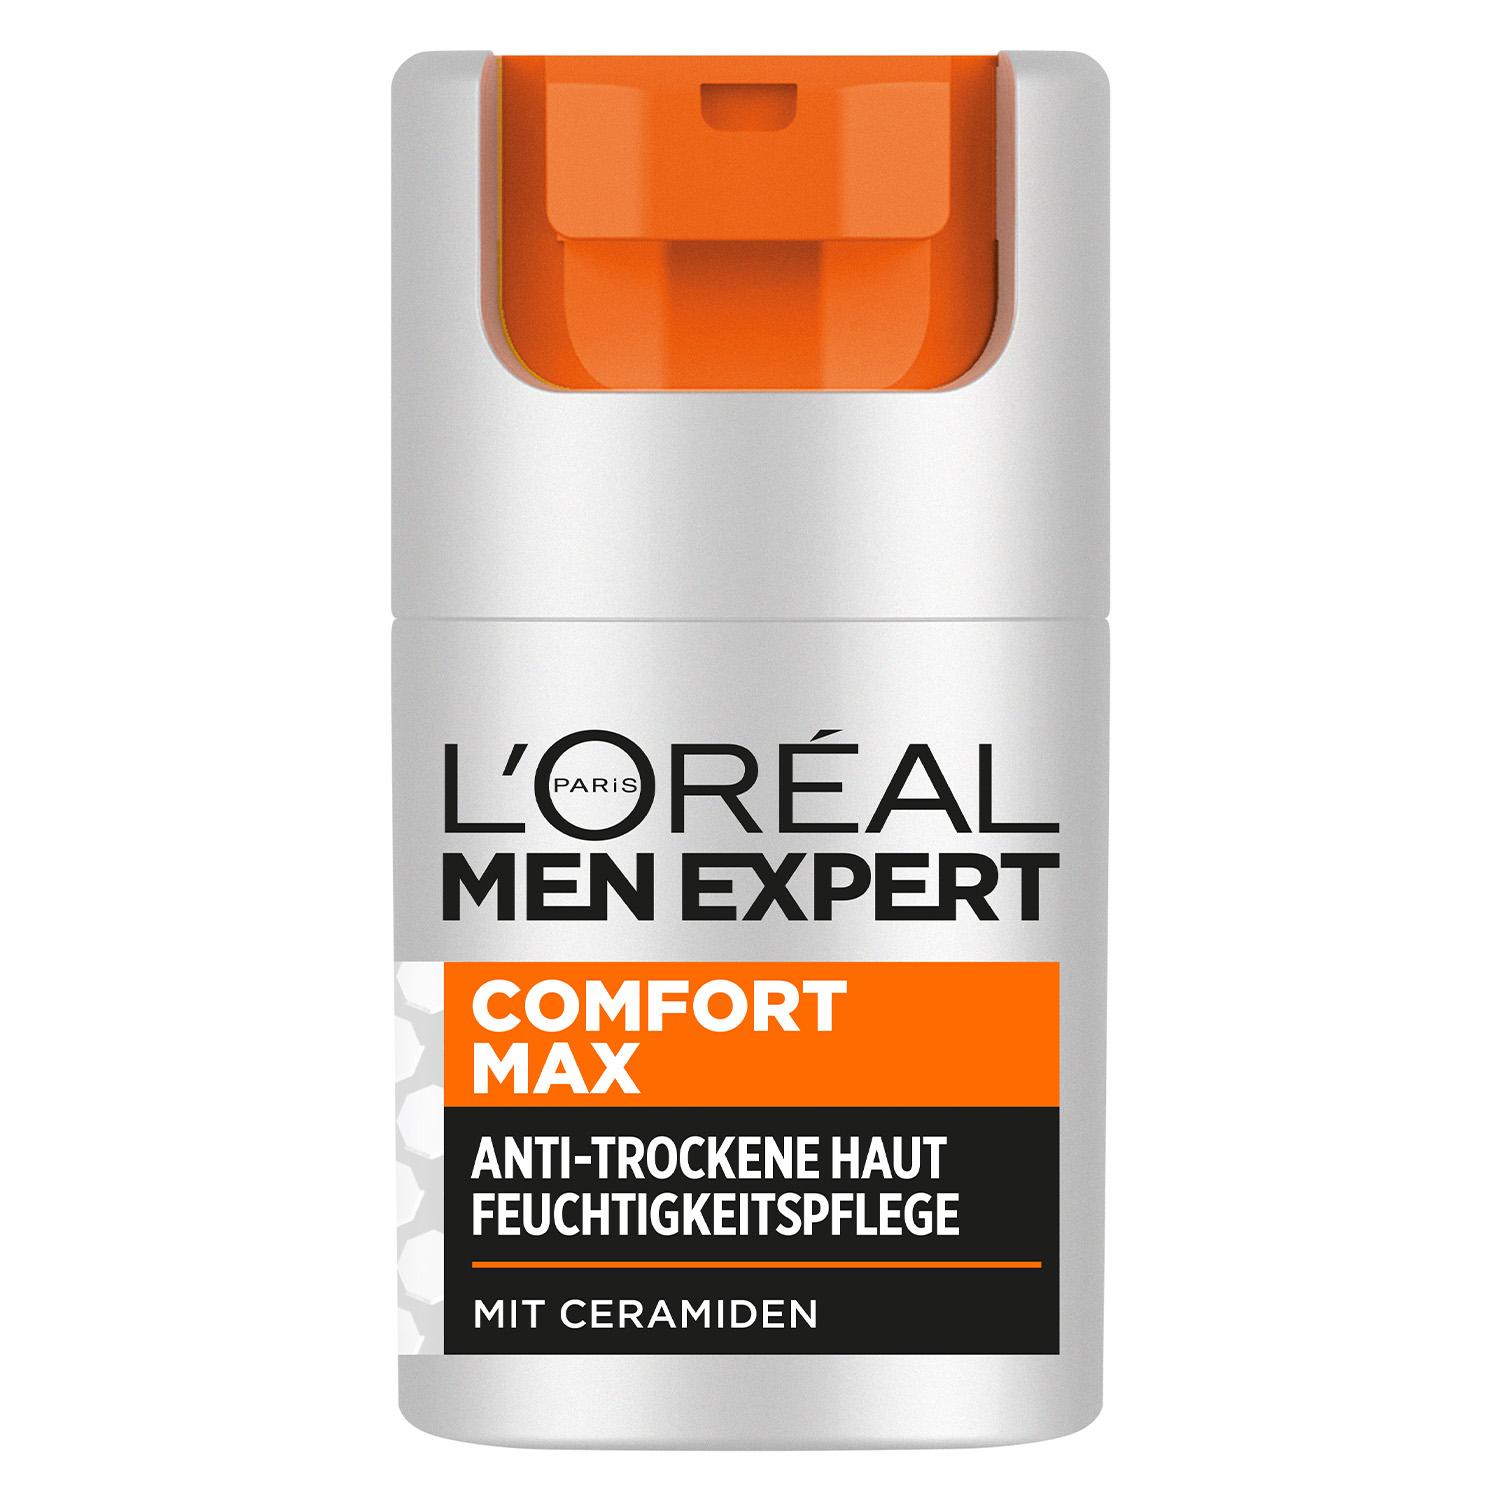 LOréal Men Expert - Comfort Max Moisturizer